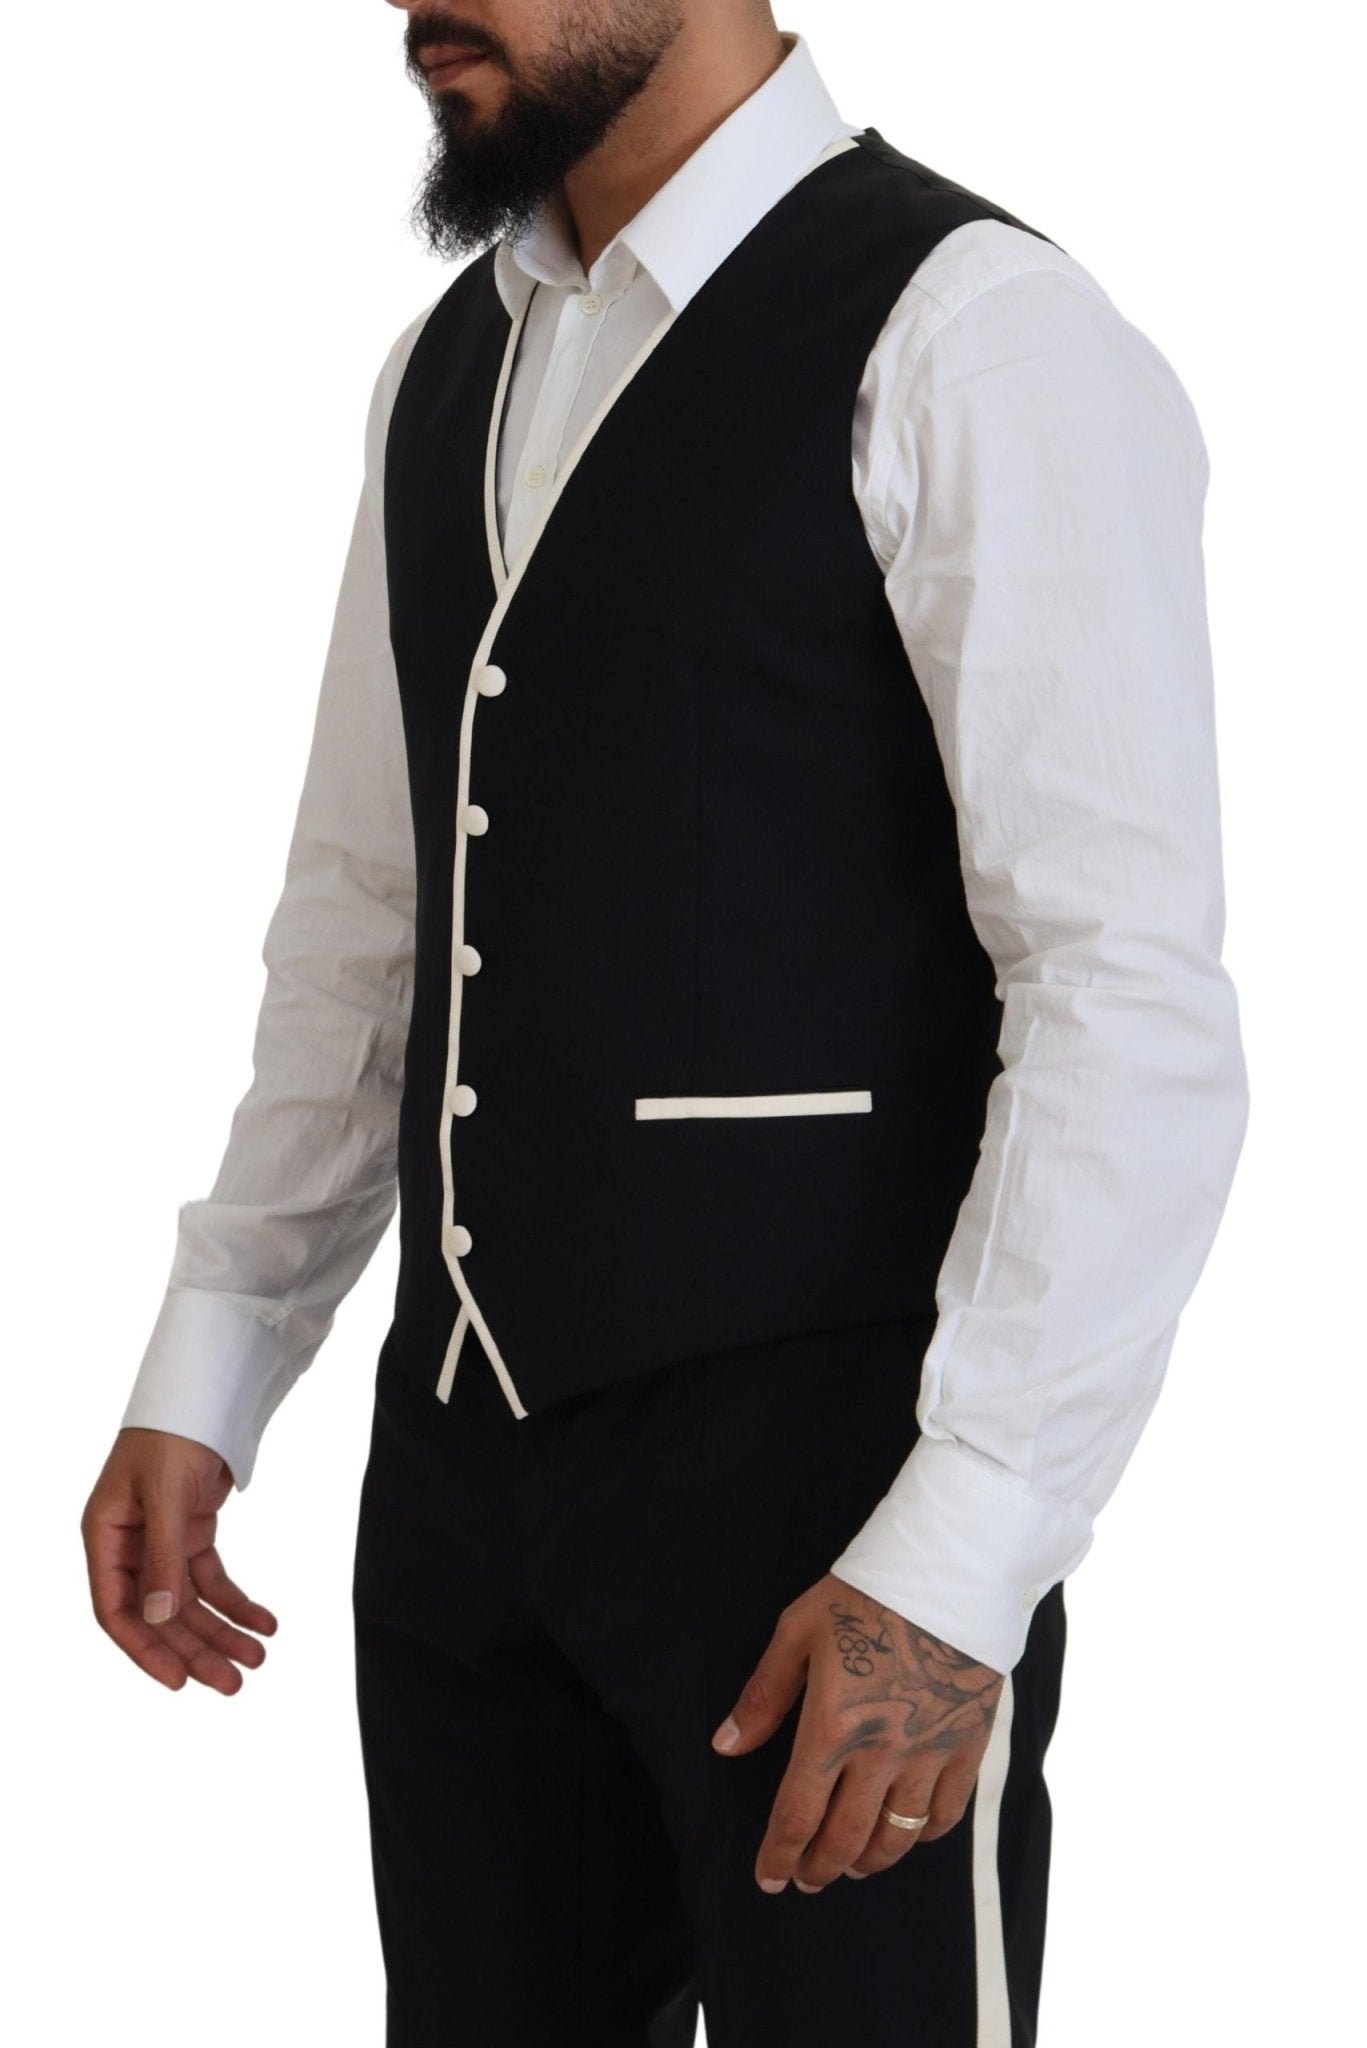 Dolce & Gabbana Black Wool White Silk Slim Fit Suit